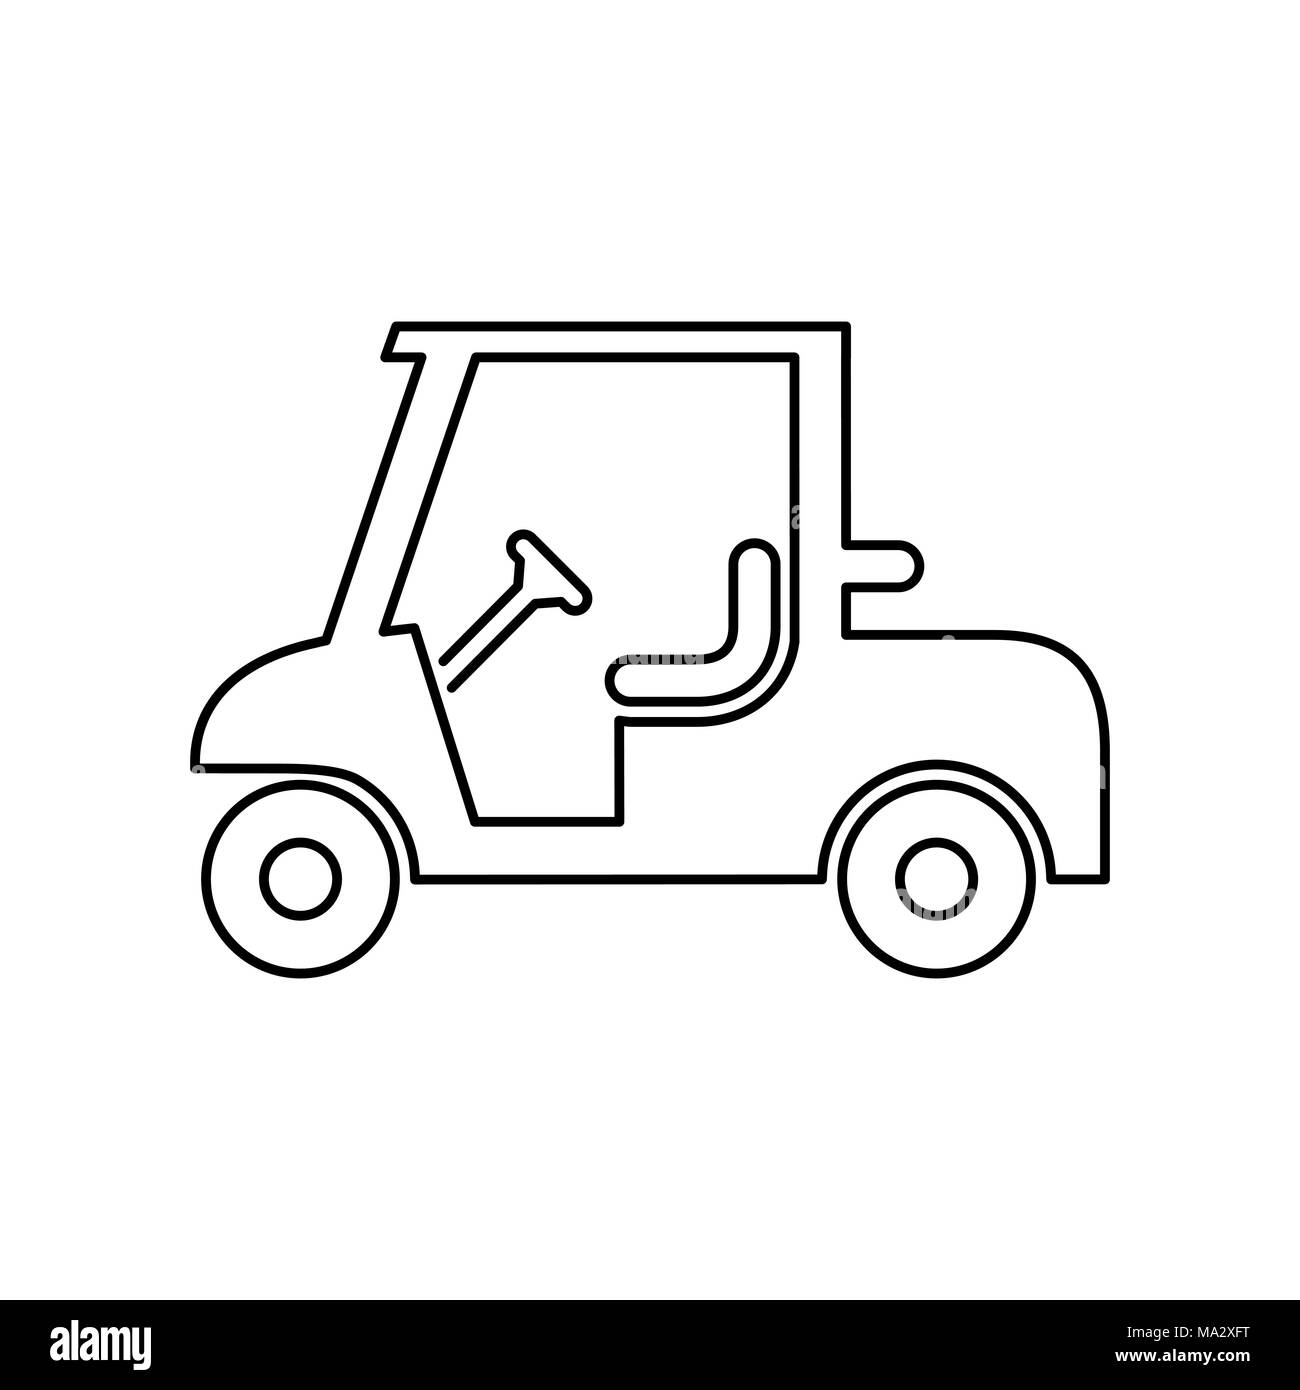 Golf car icon simple flat vector illustration. Stock Vector